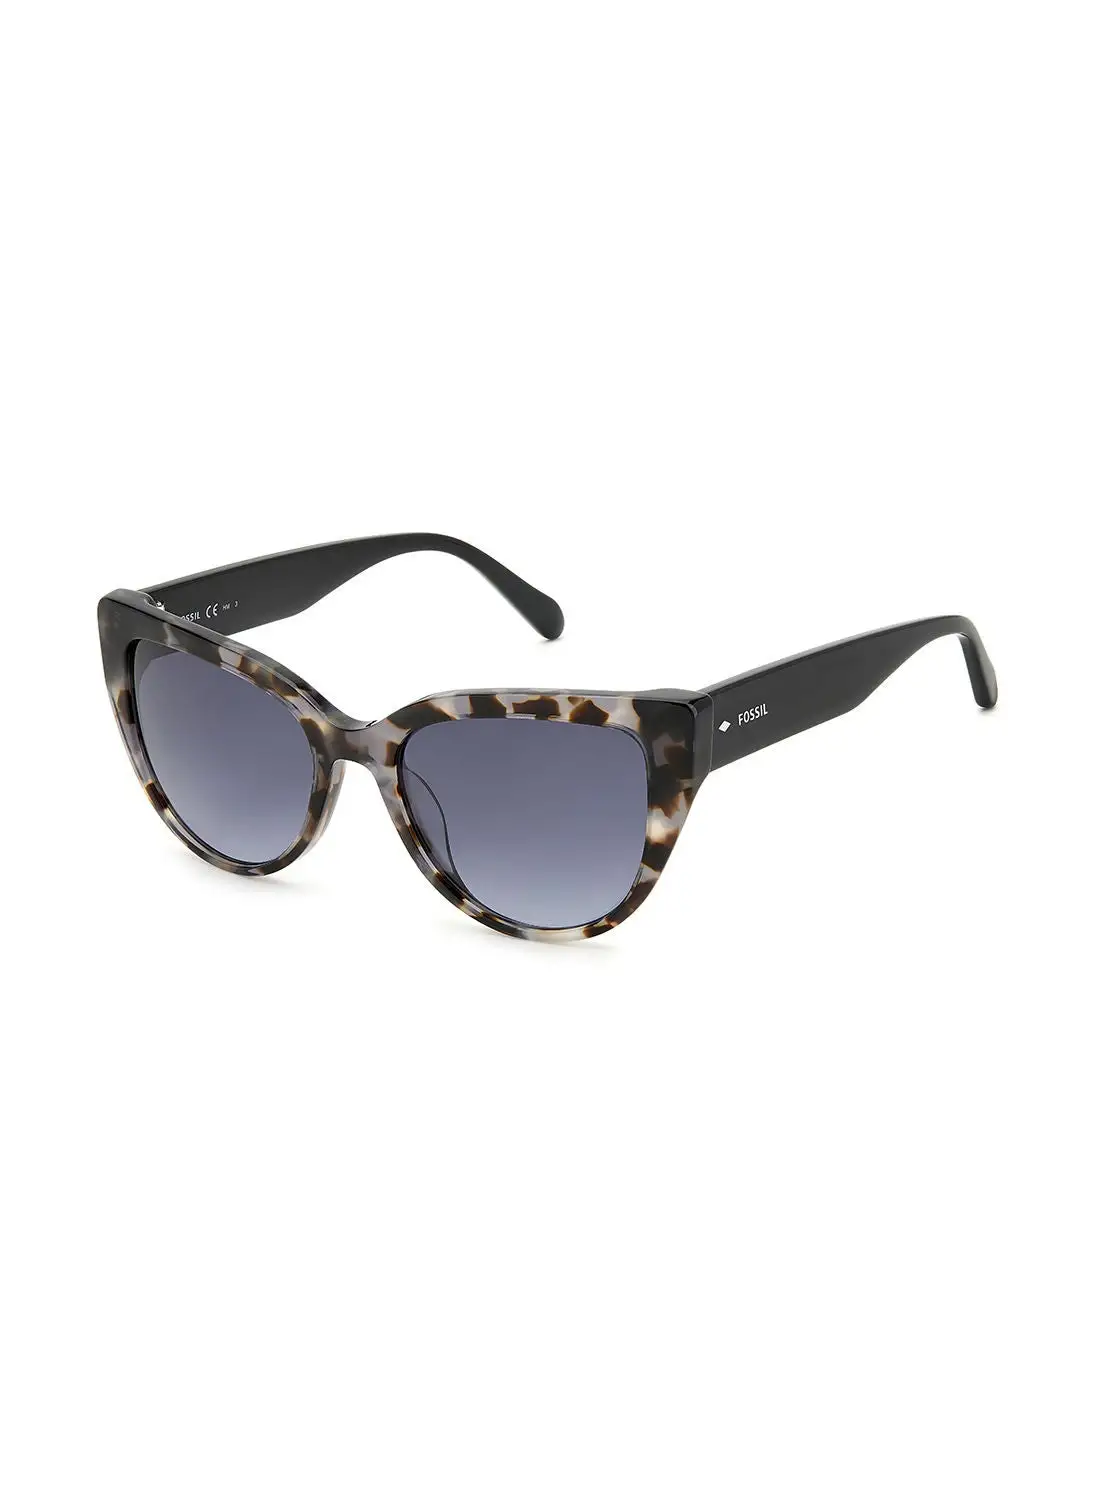 FOSSIL Women's UV Protection Cat Eye Sunglasses - Fos 2125/S Grey Hvn 52 - Lens Size: 52 Mm